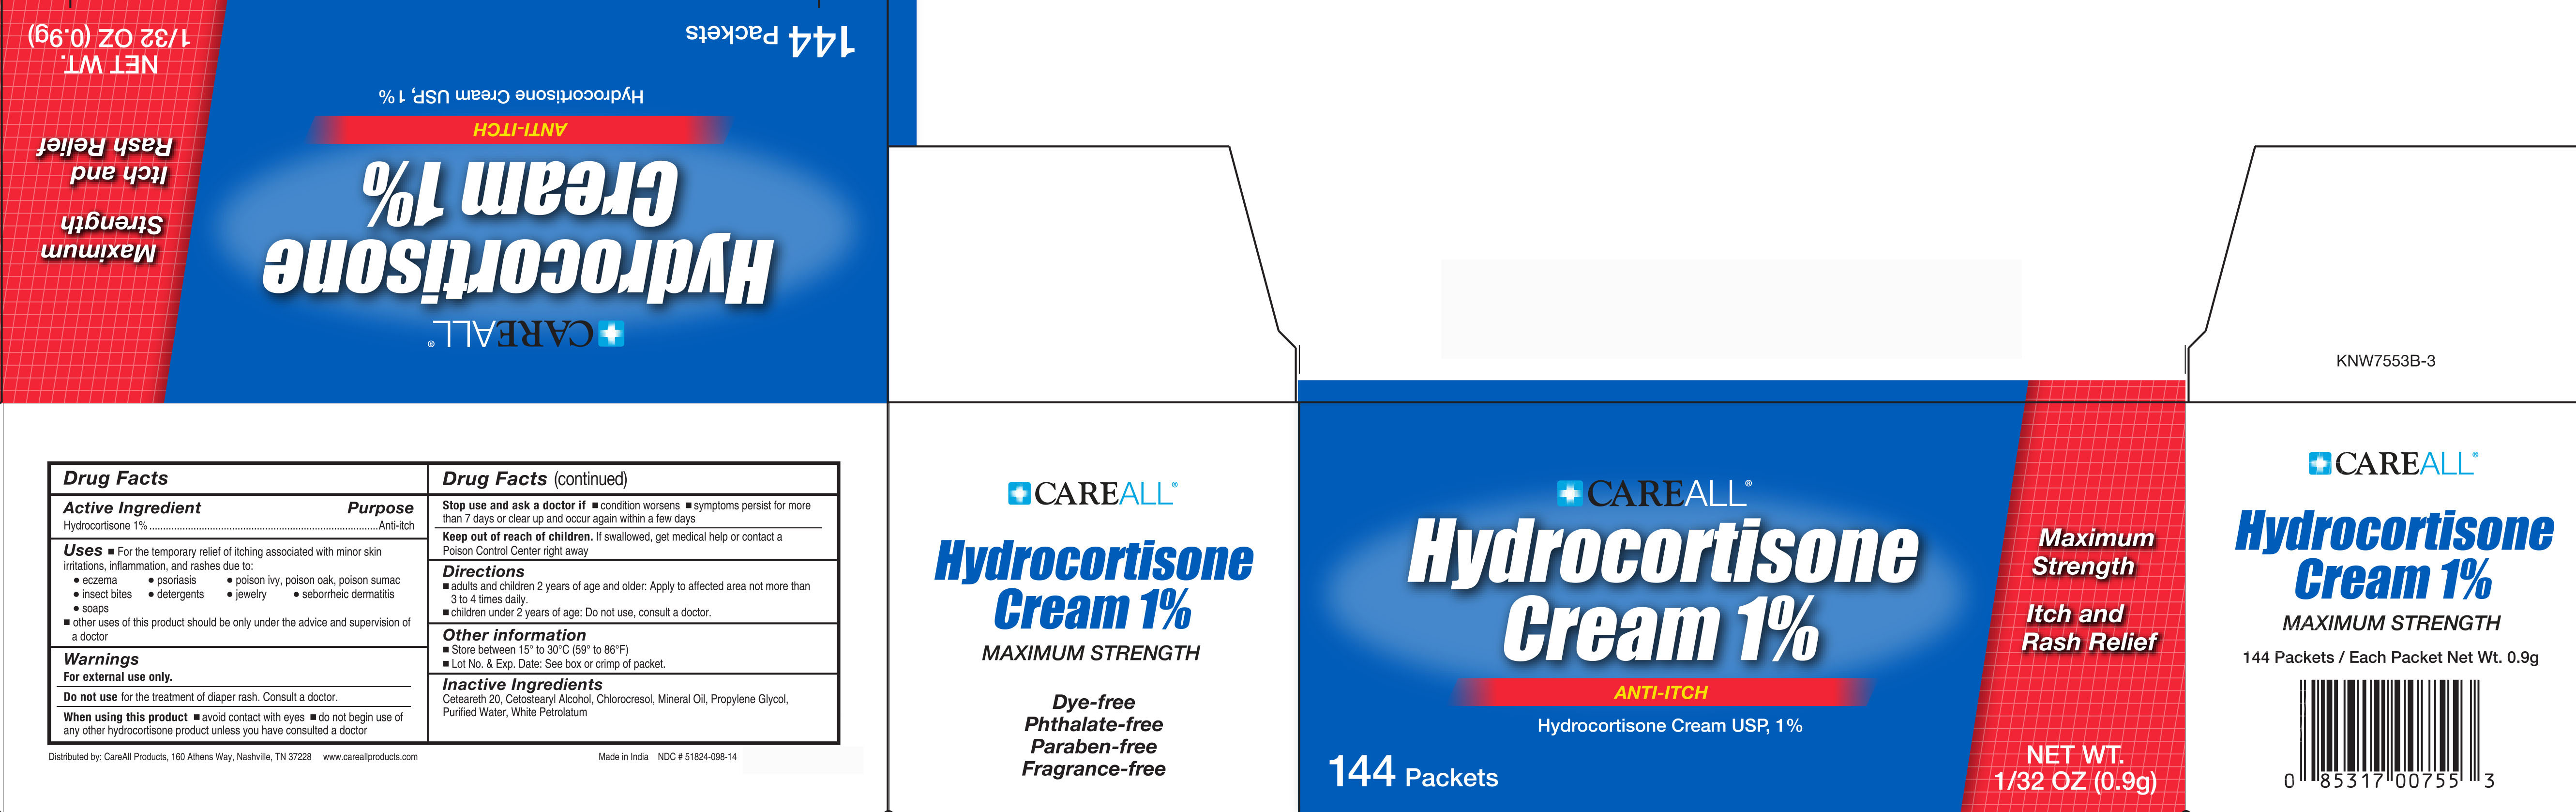 Hydrocortisone Packet Box Label